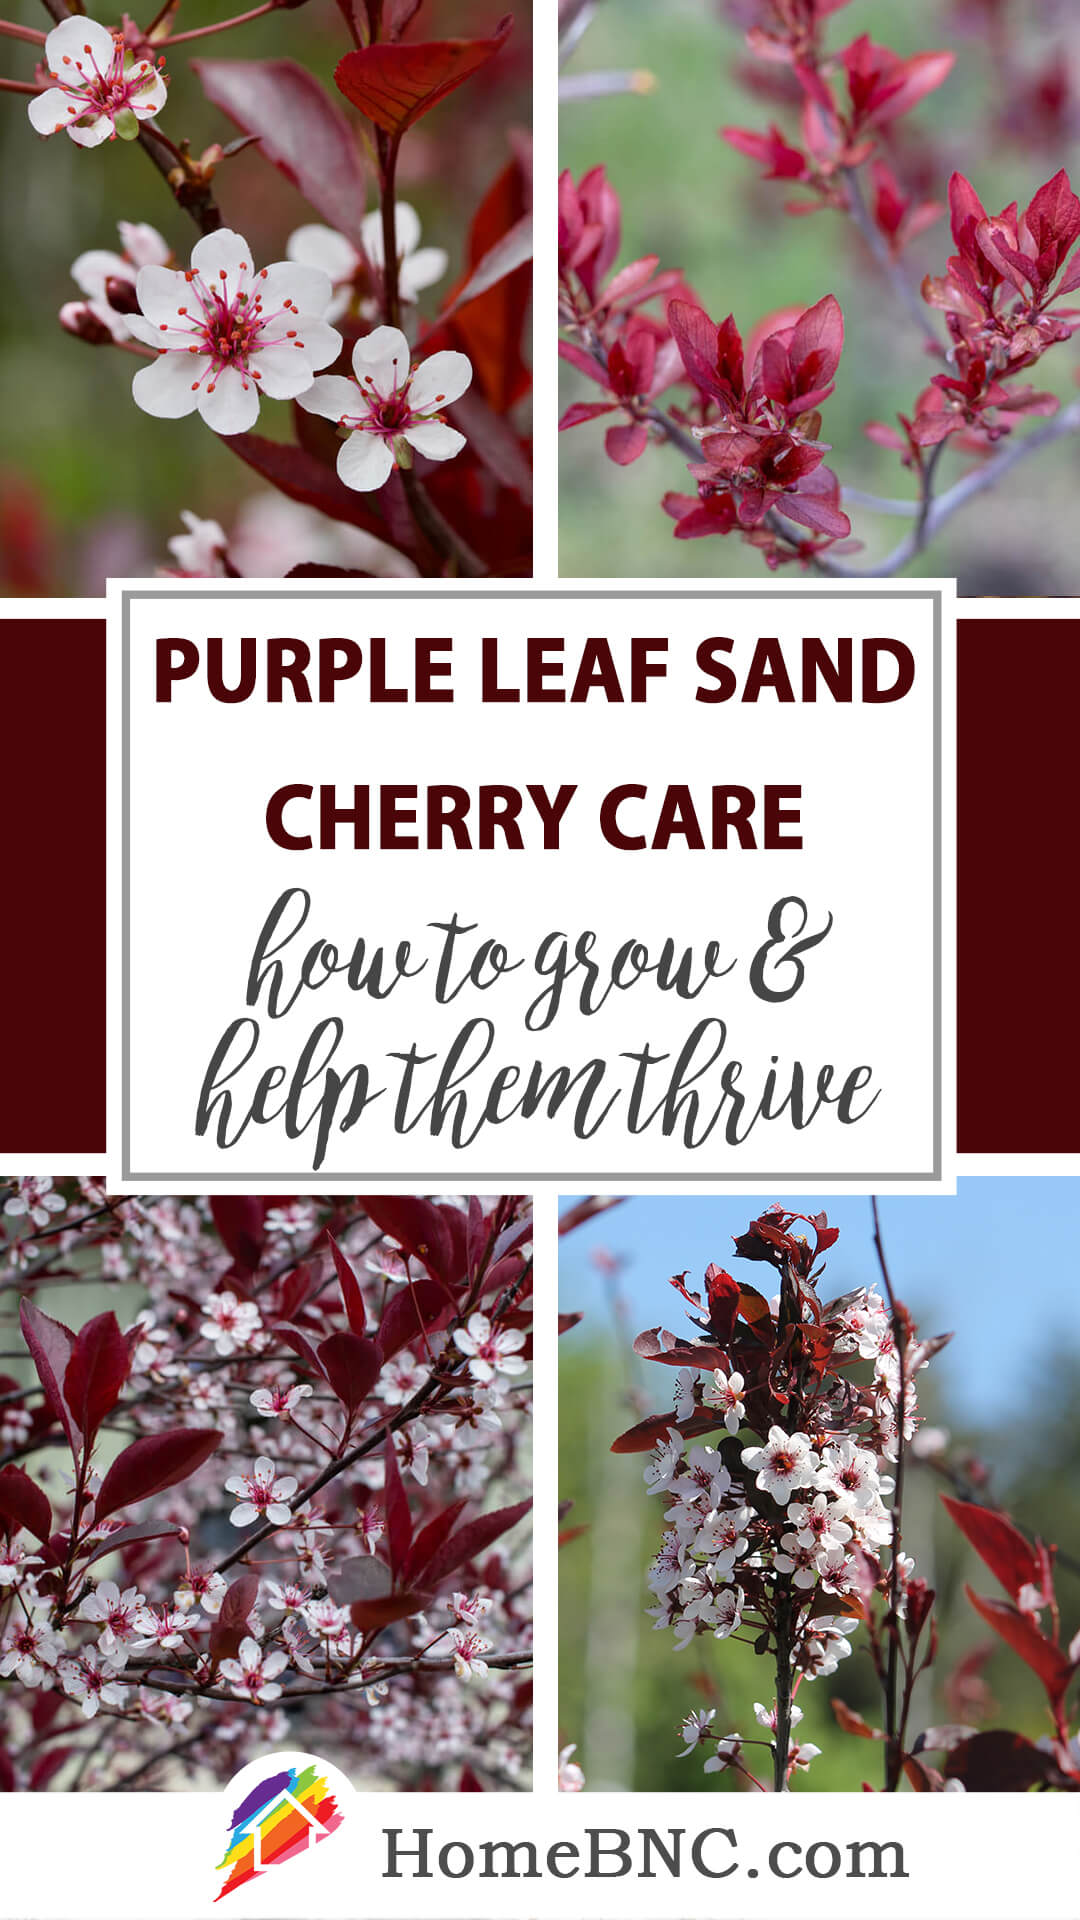 Purple leaf sand cherry care